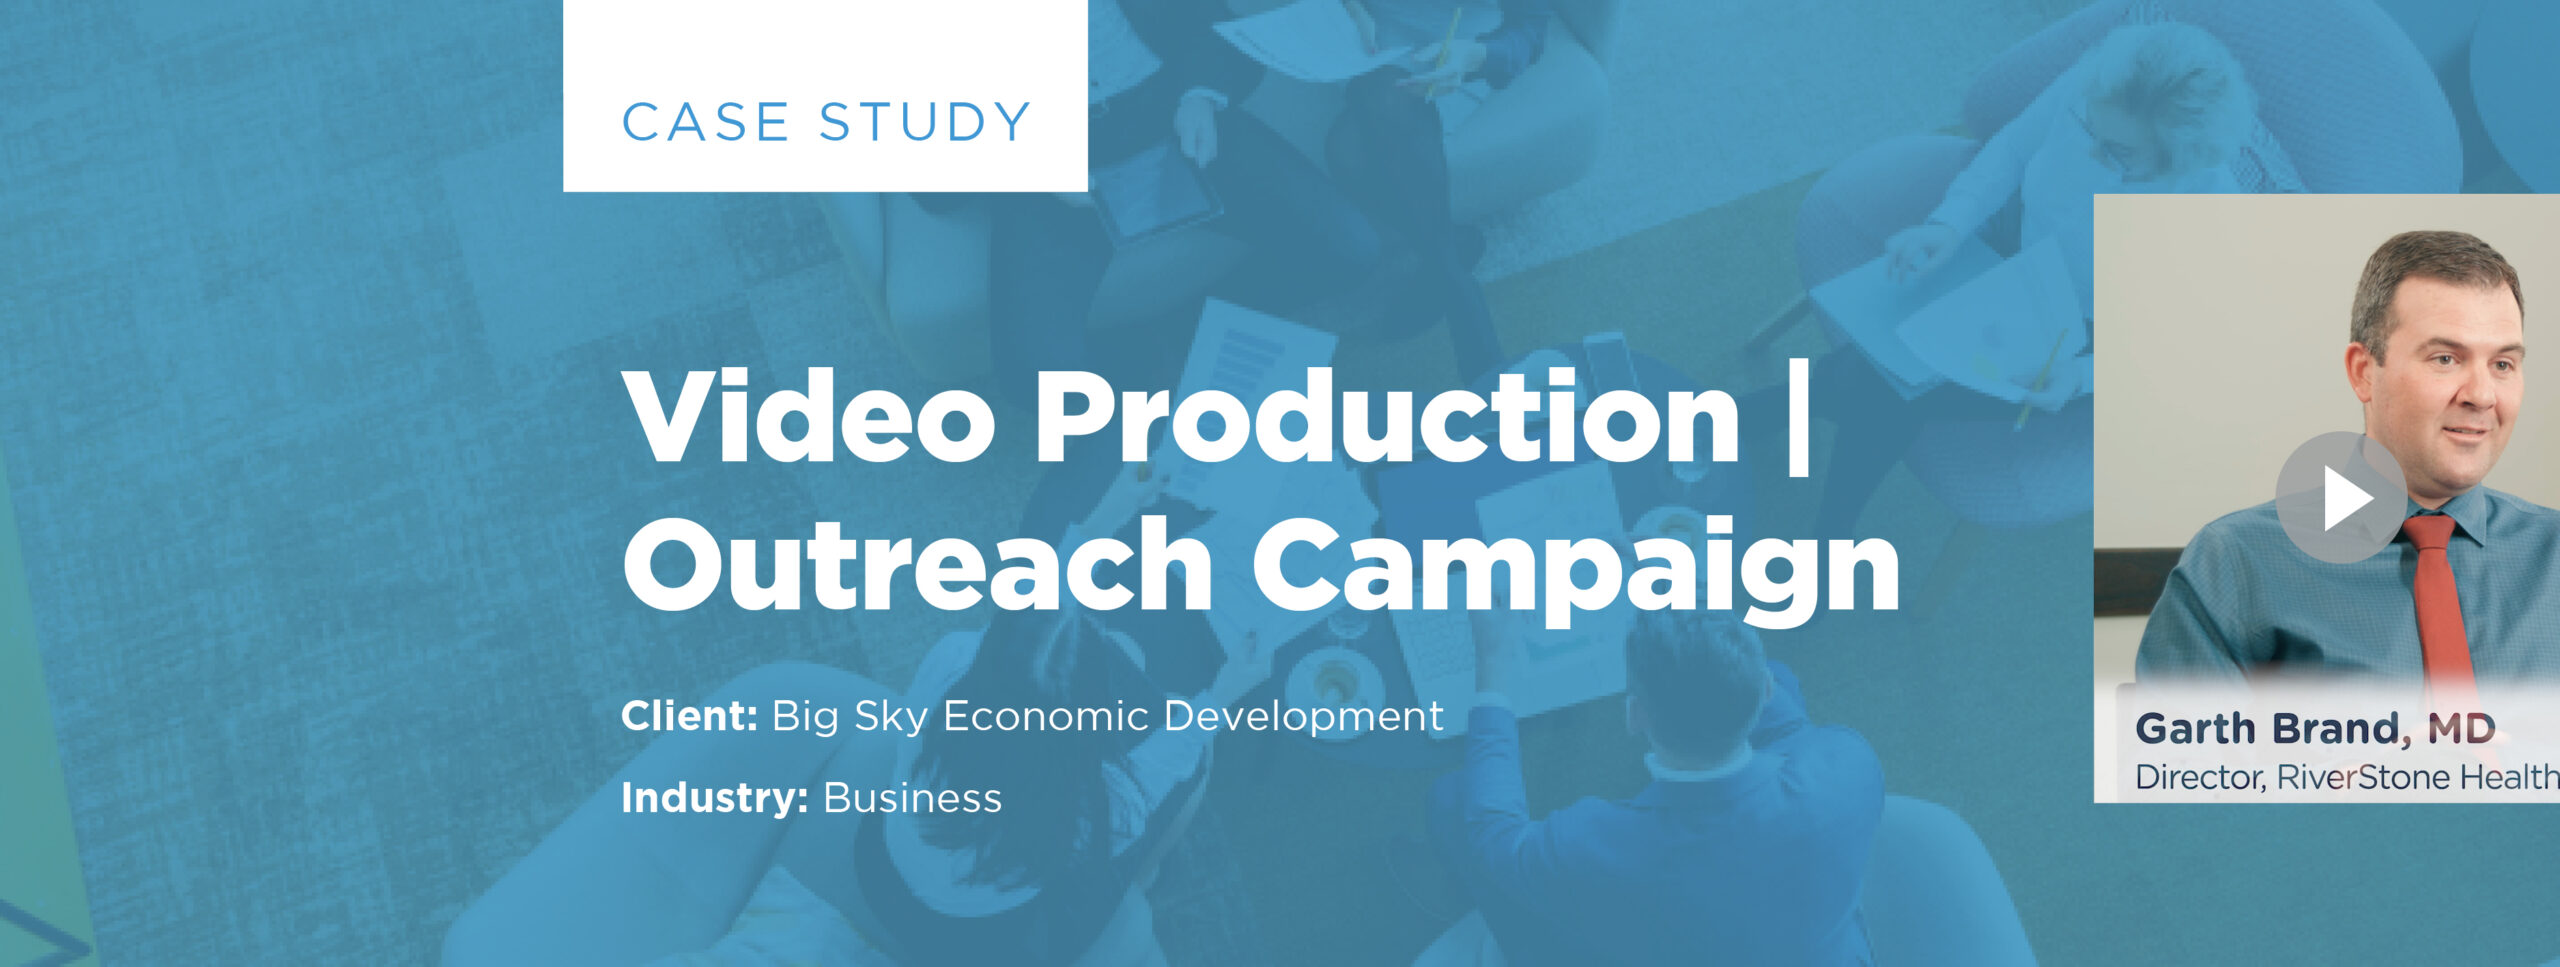 Video production case study